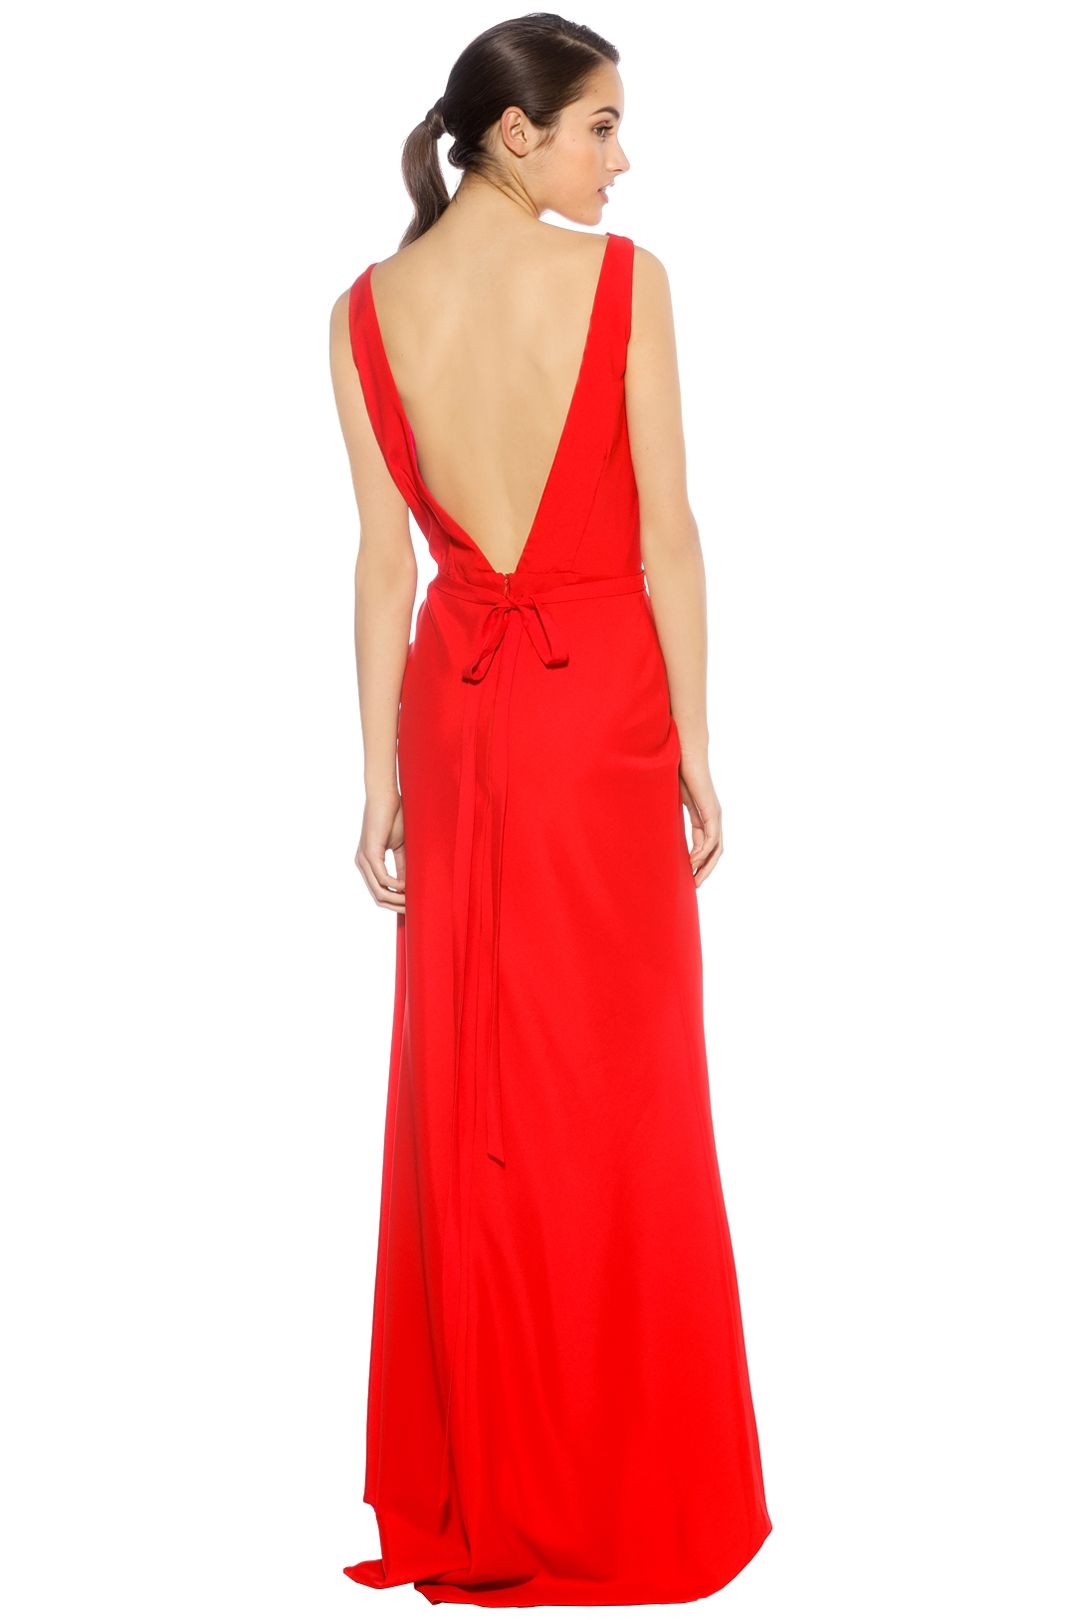 LUOM.O - Paloma Dress - Red - Back